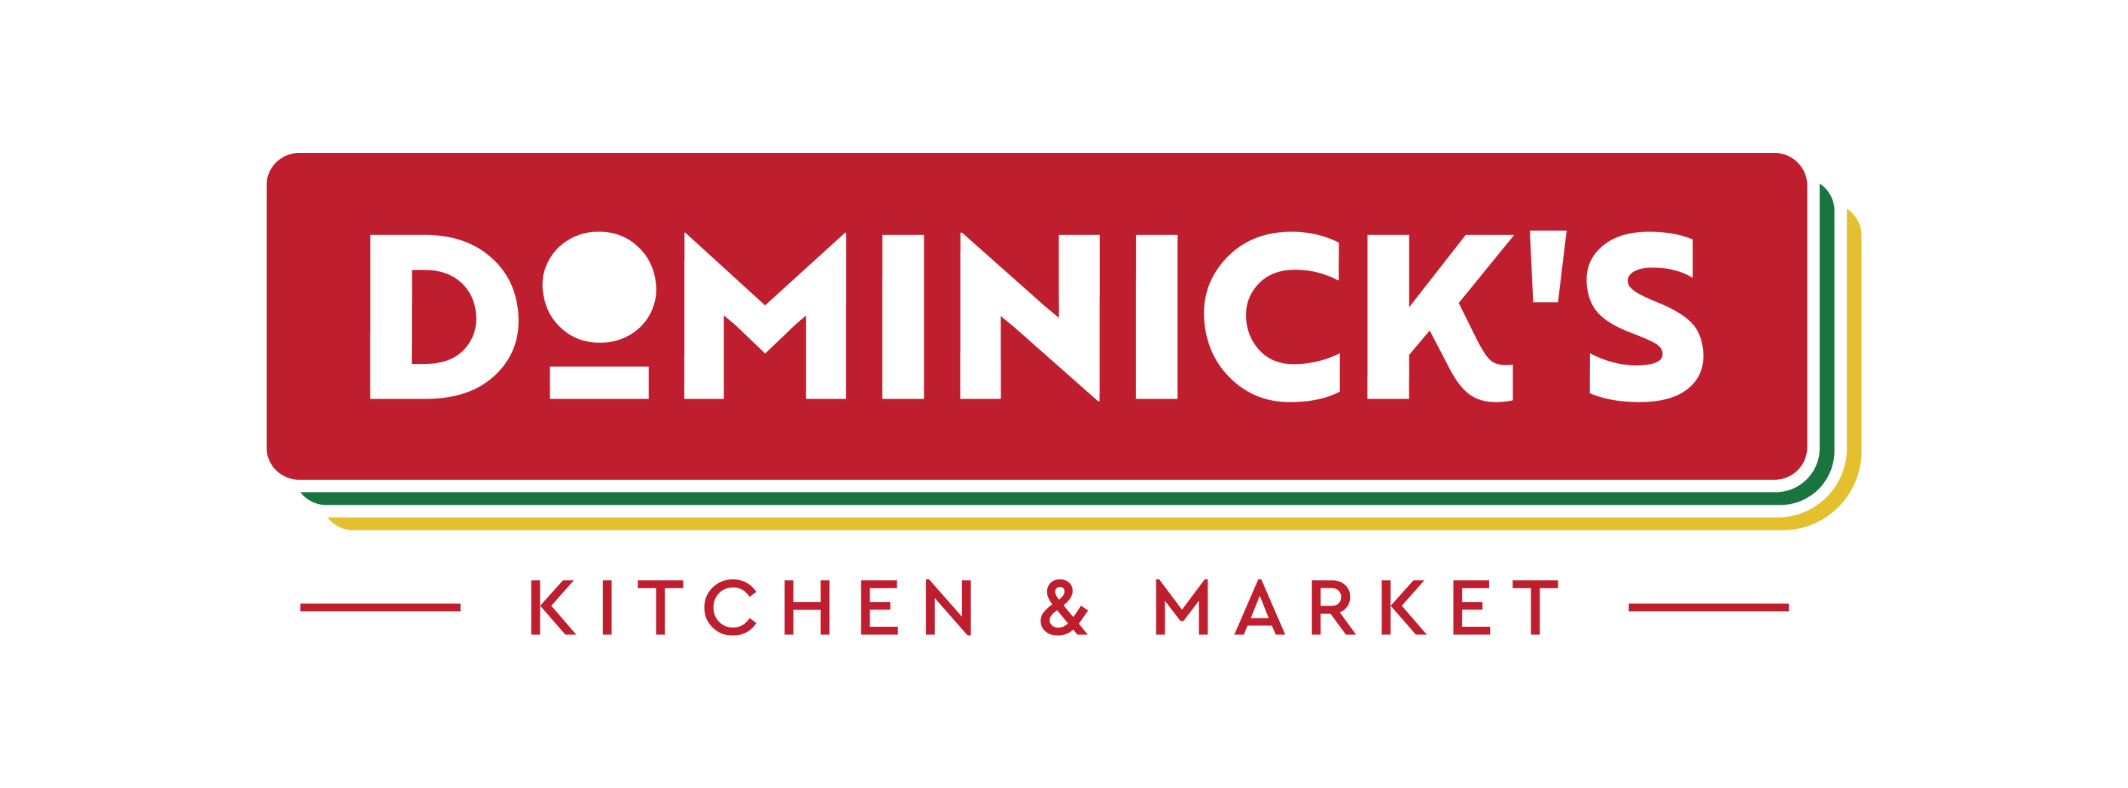 Dominick’s Kitchen & Market